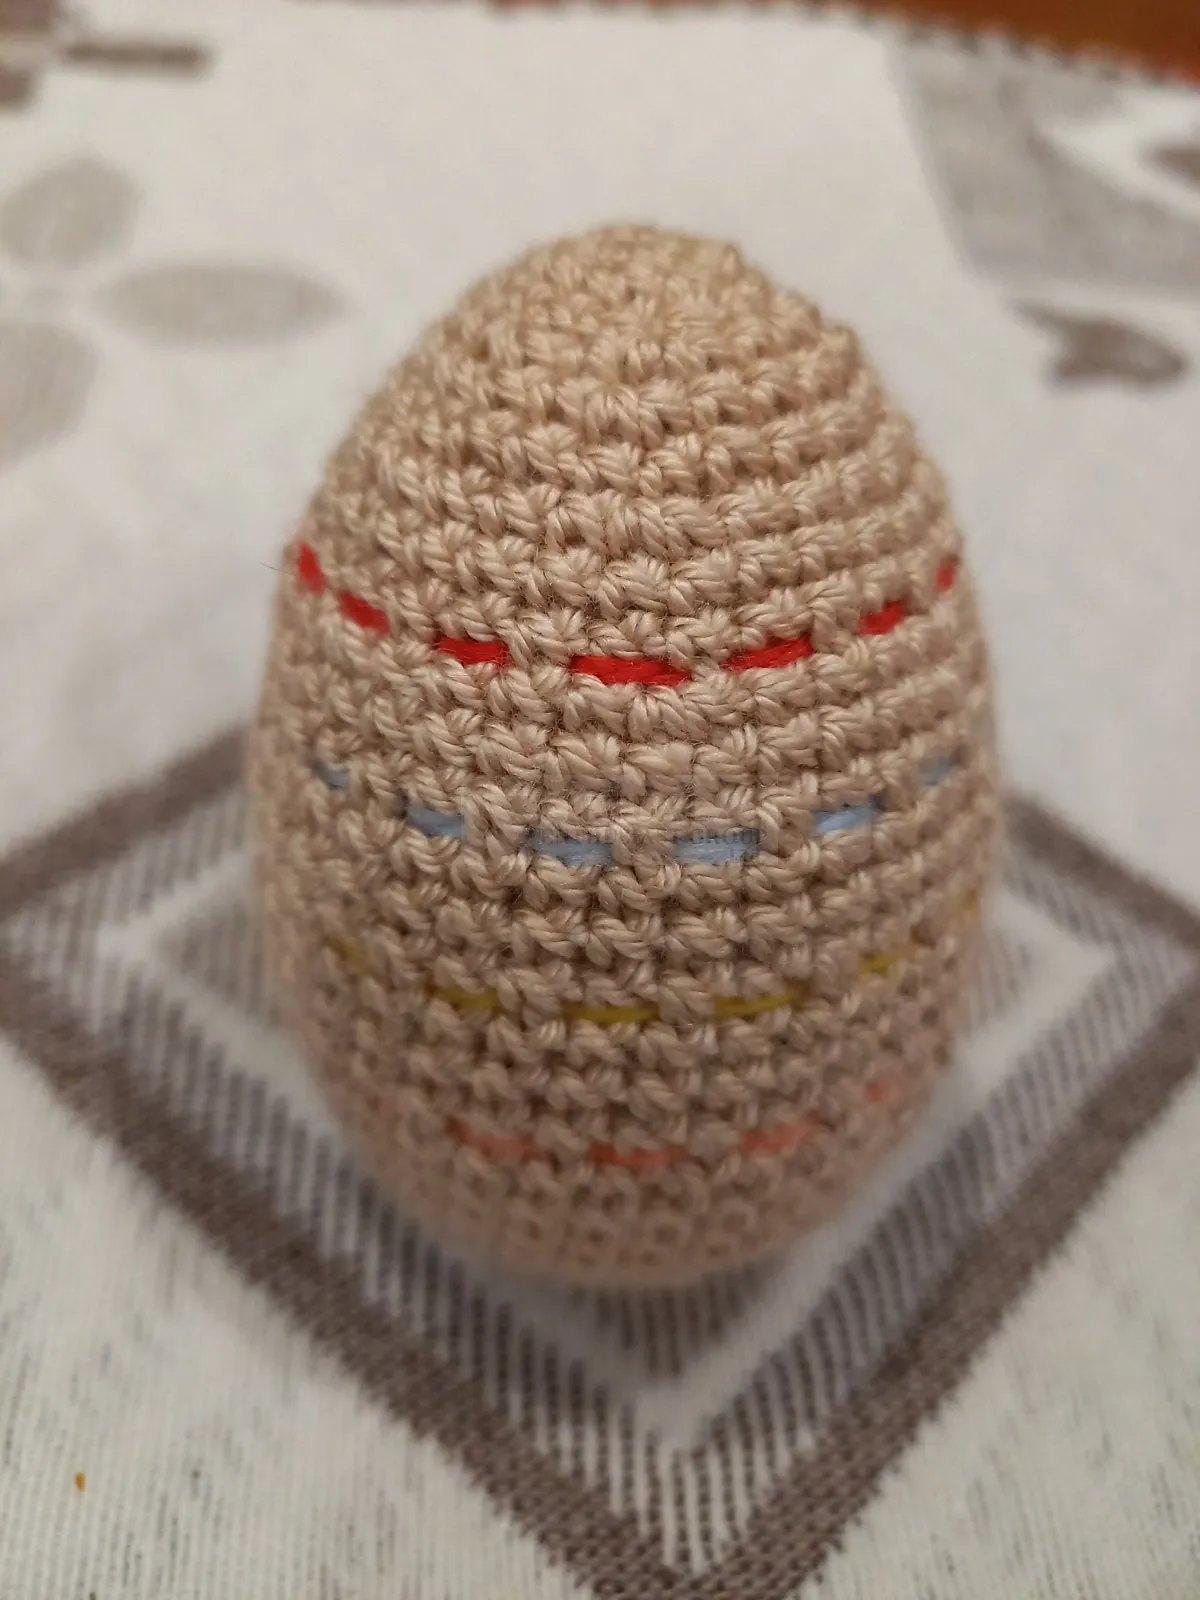  Ръчно плетено яйце 4